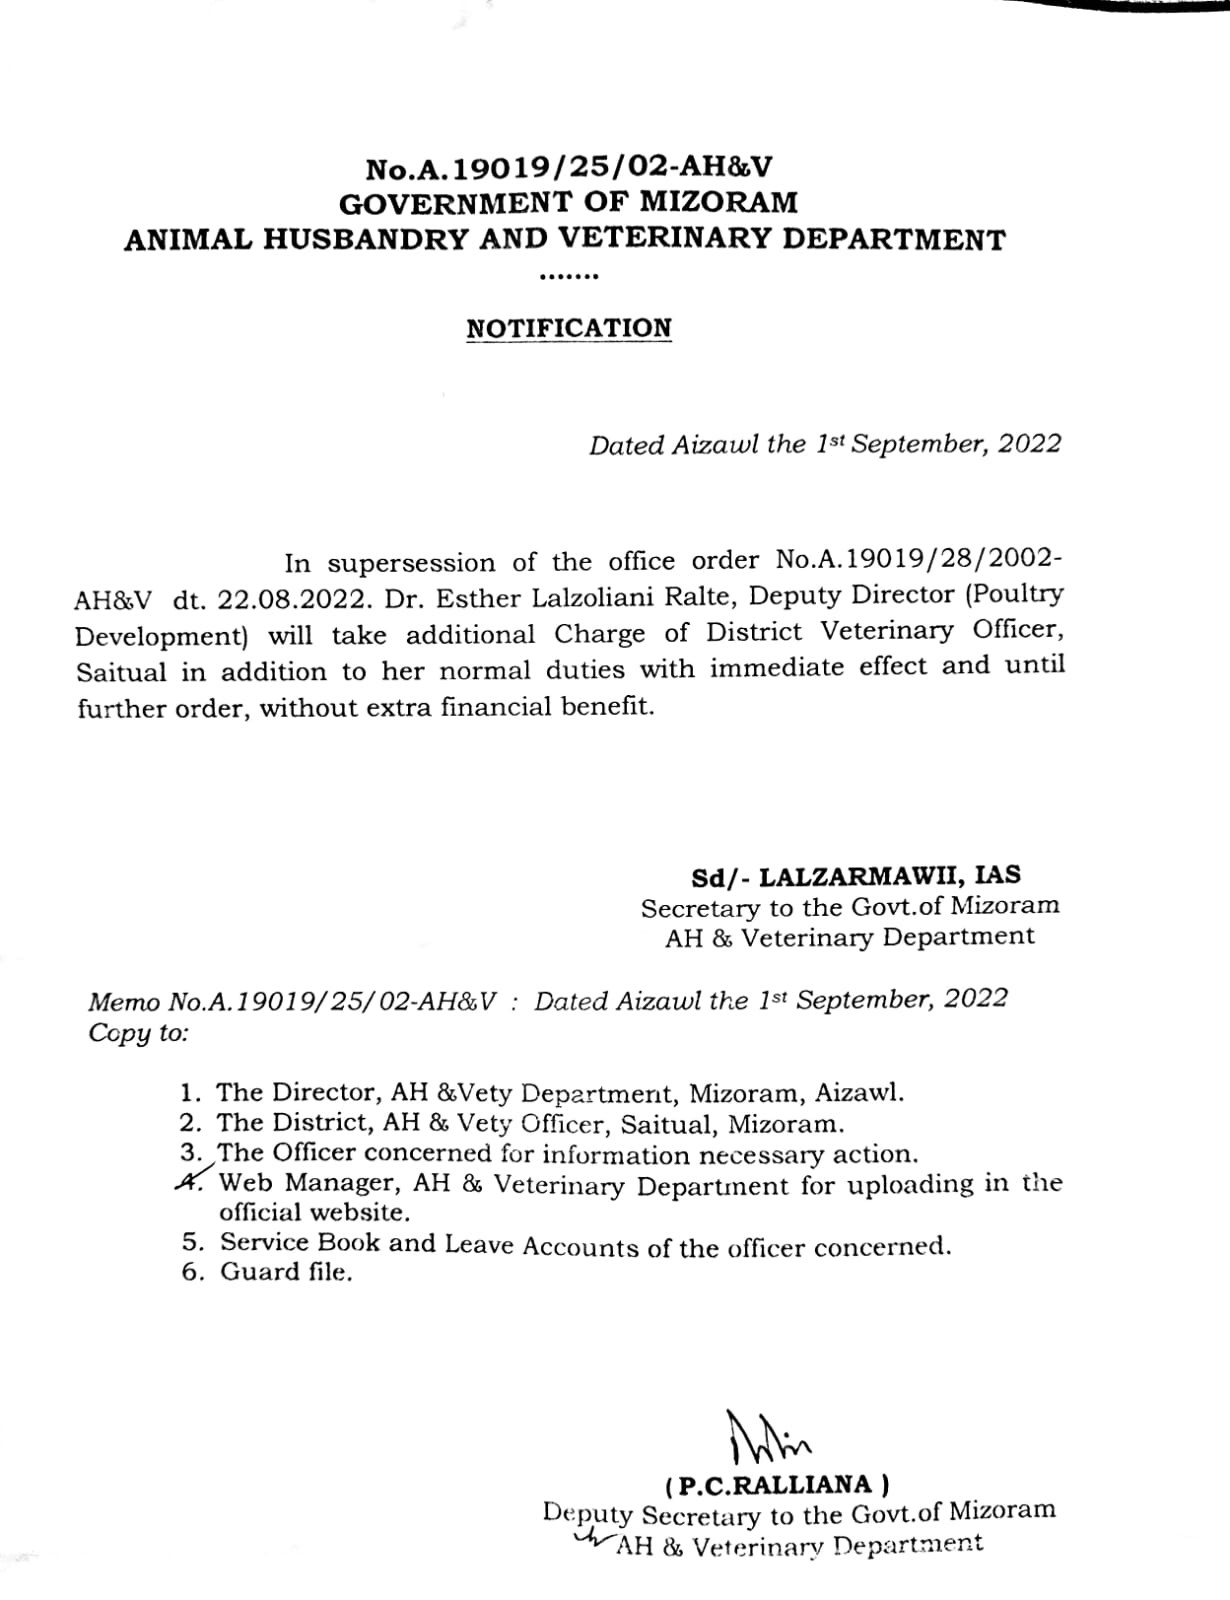 Department of Animal Husbandry and Veterinary